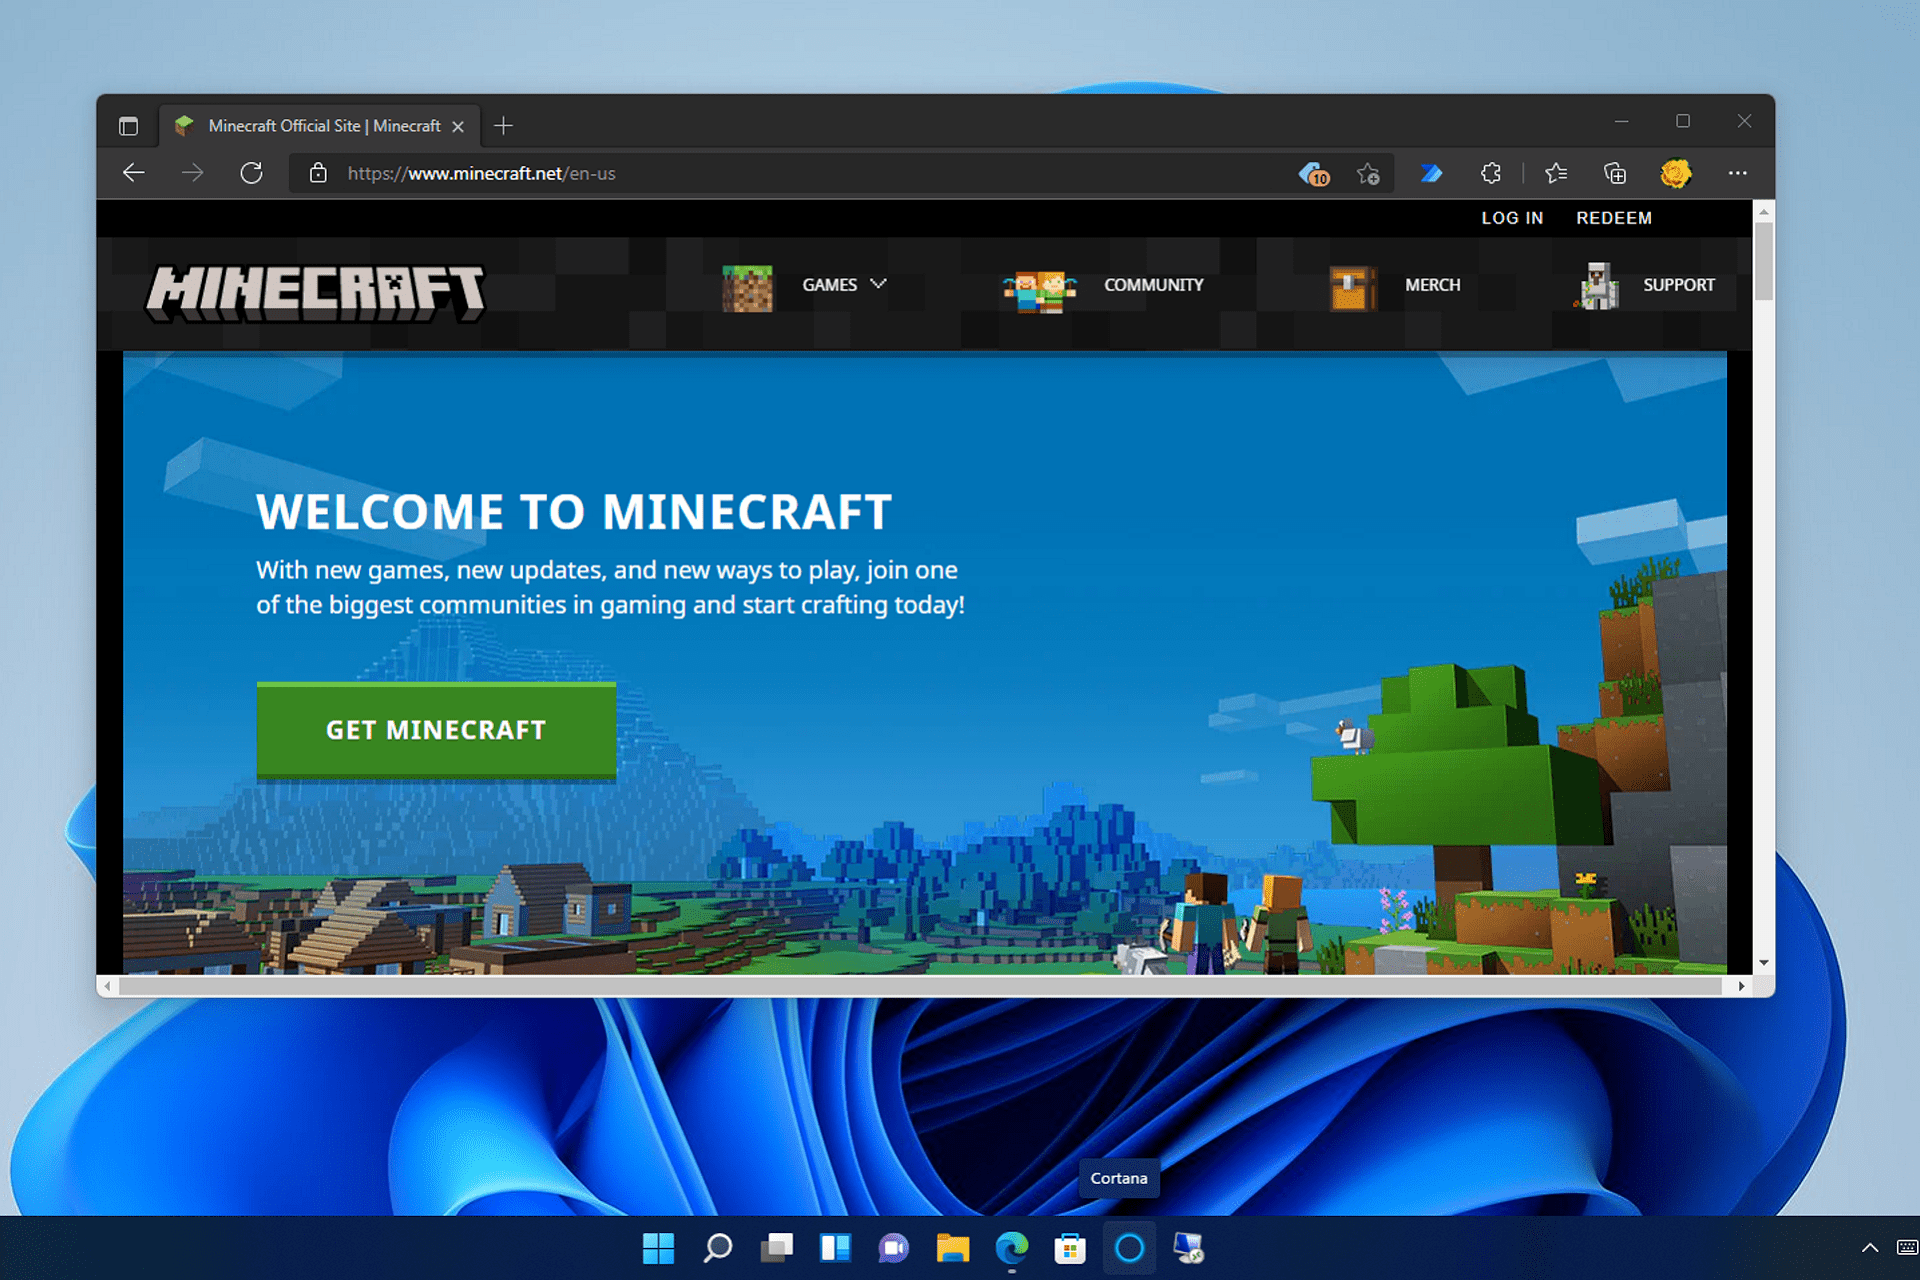 I cant install minecraft for Windows - Microsoft Community